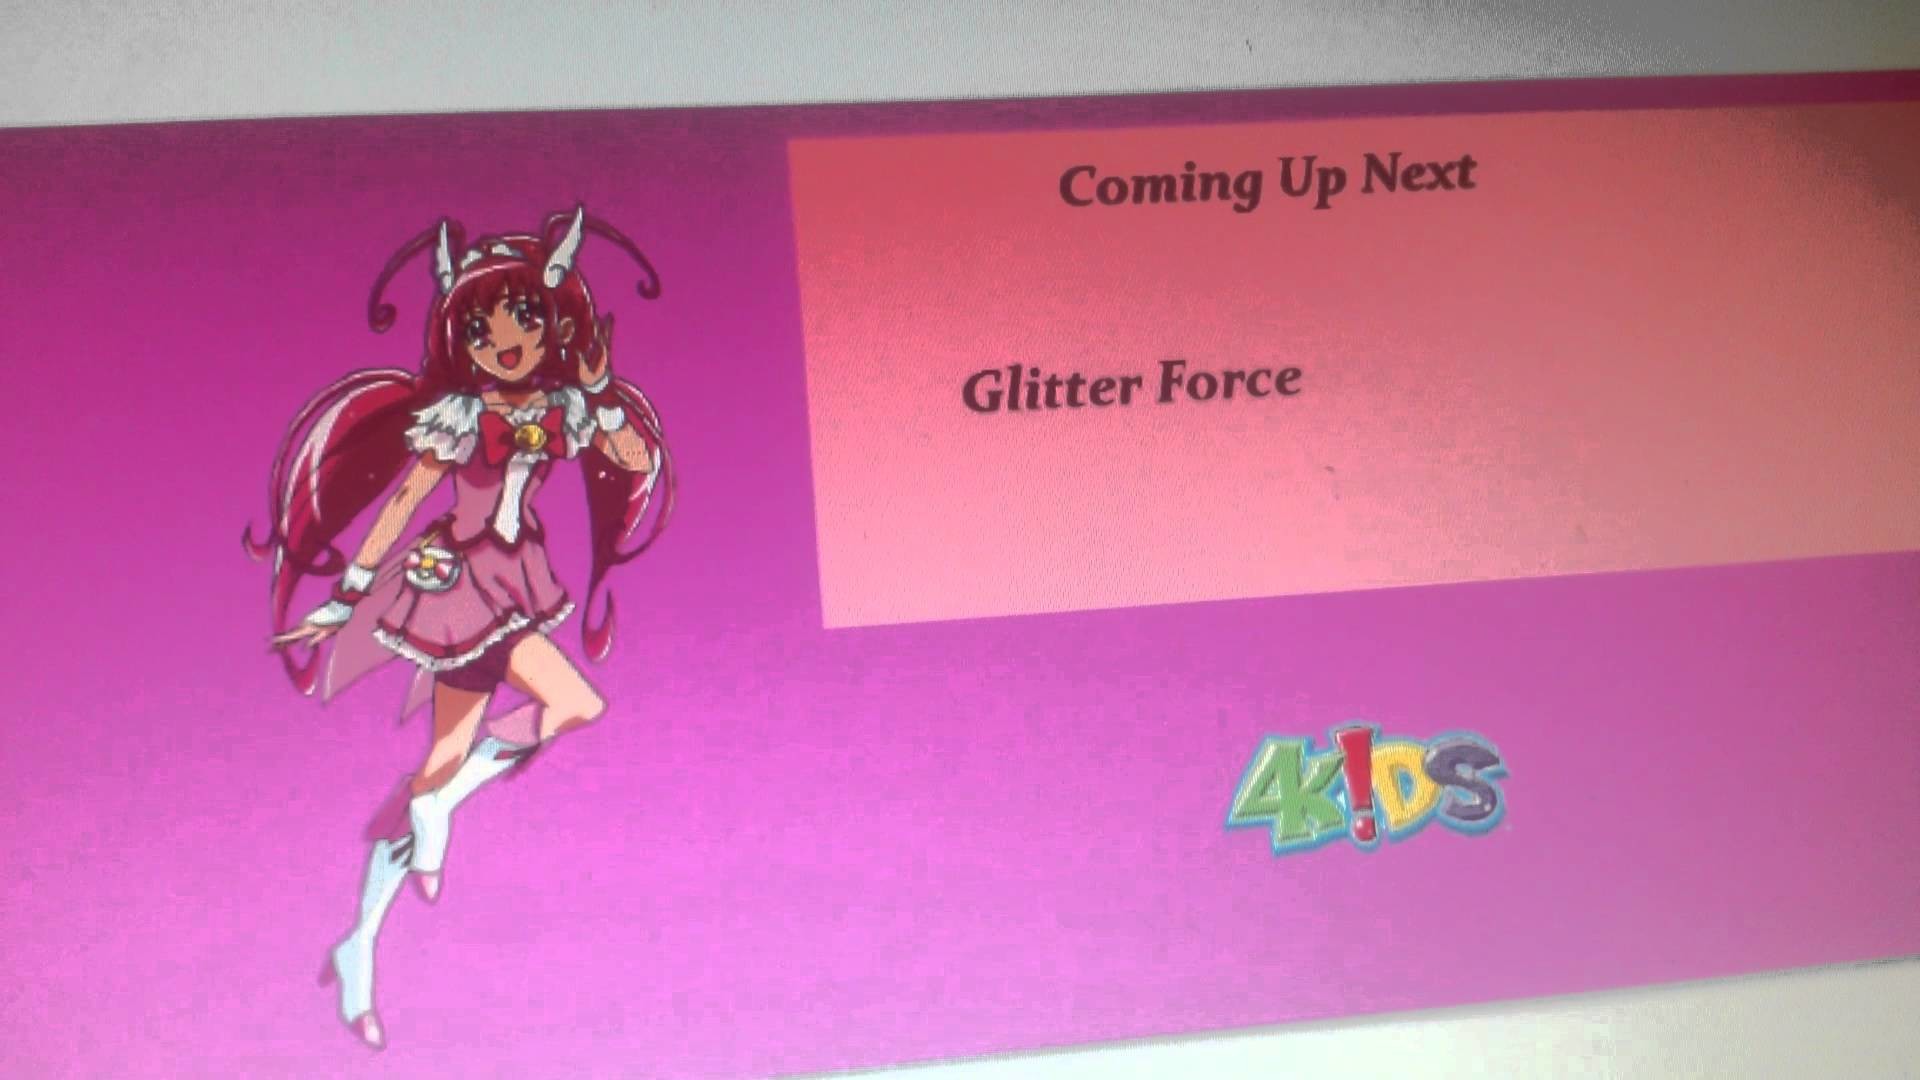 1920x1080 Glitter Force Coming Up Next 4Kids